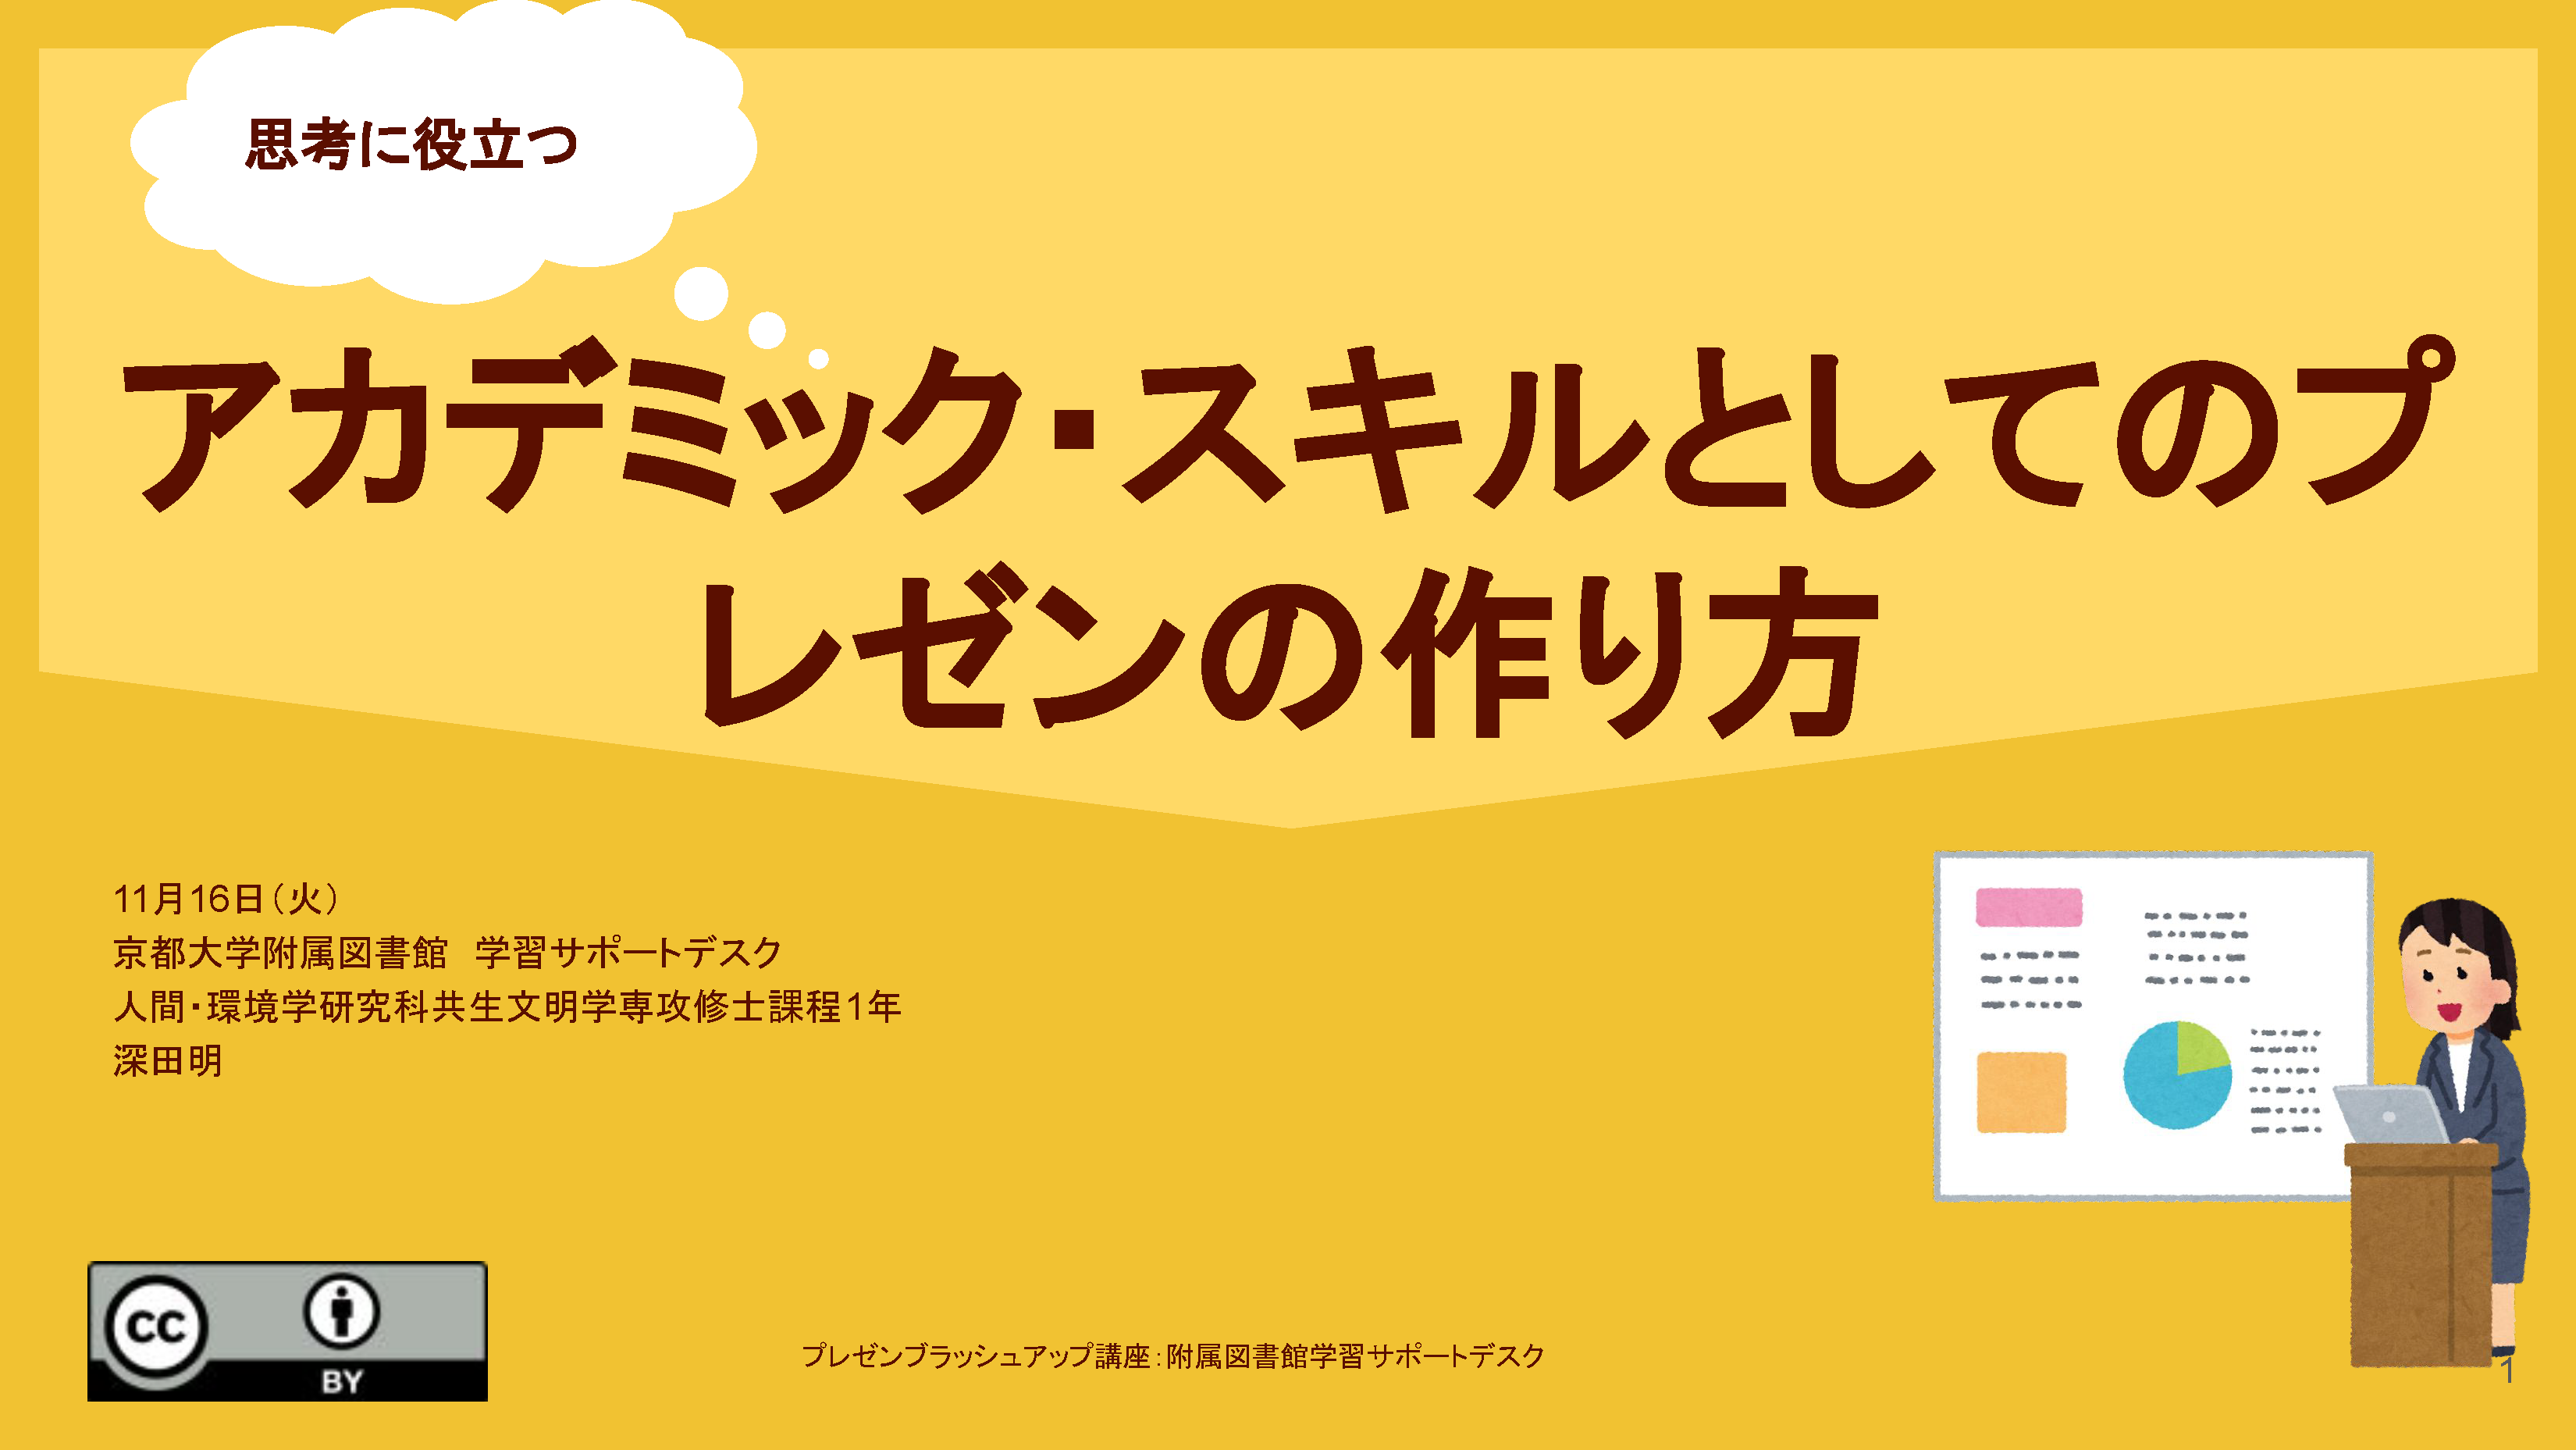 PDF　LaTex hands-on tutorial　（京都大学学術情報リポジトリKURENAIから閲覧可能）